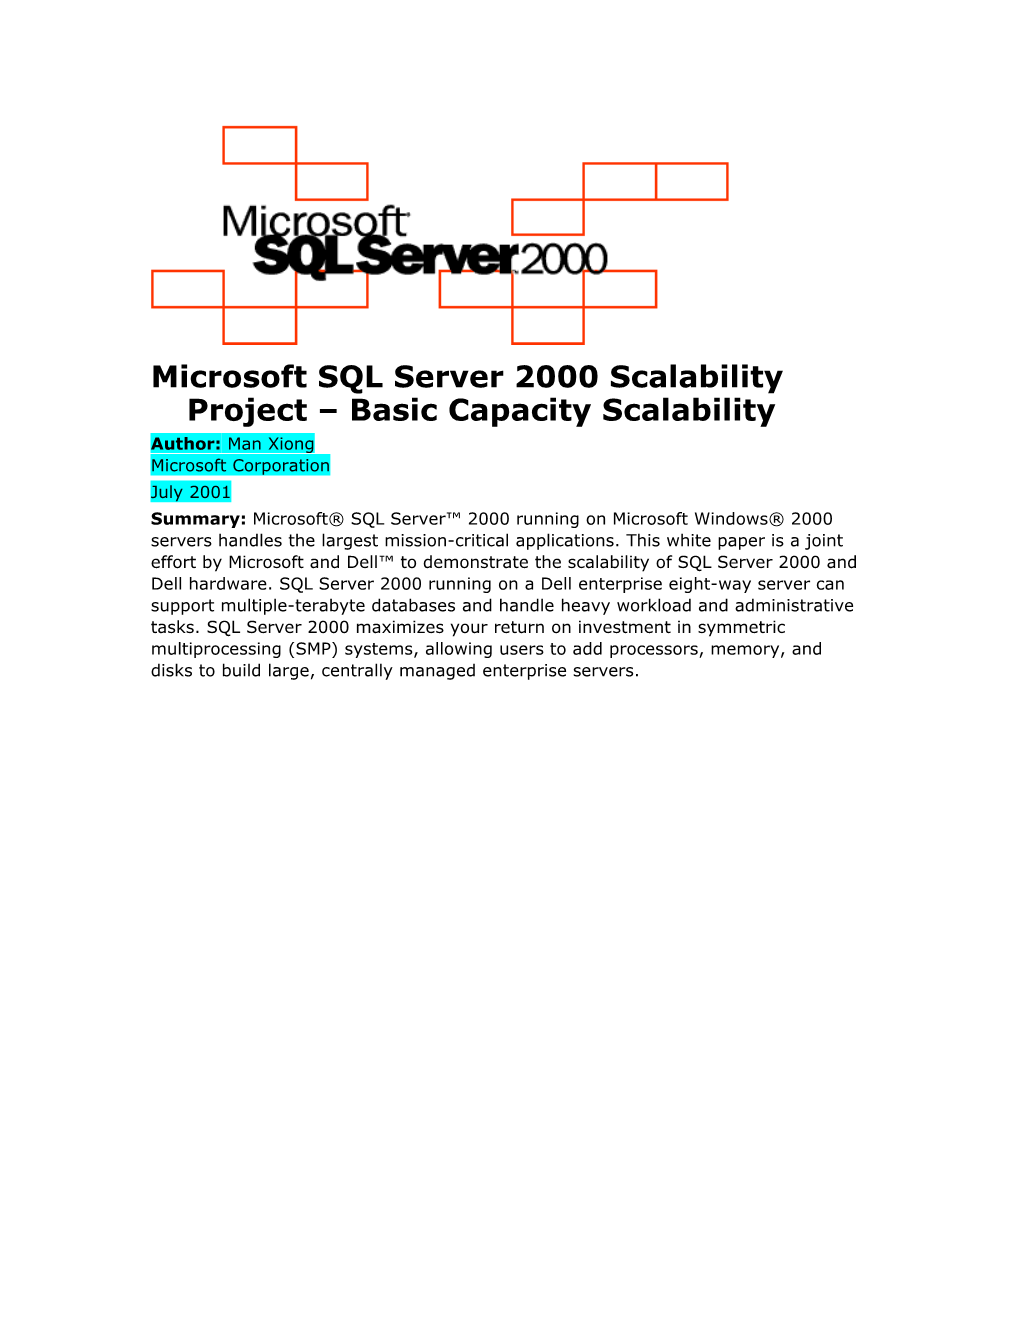 Microsoft SQL Server 2000 Scalability Project Basic Capacity Scalability